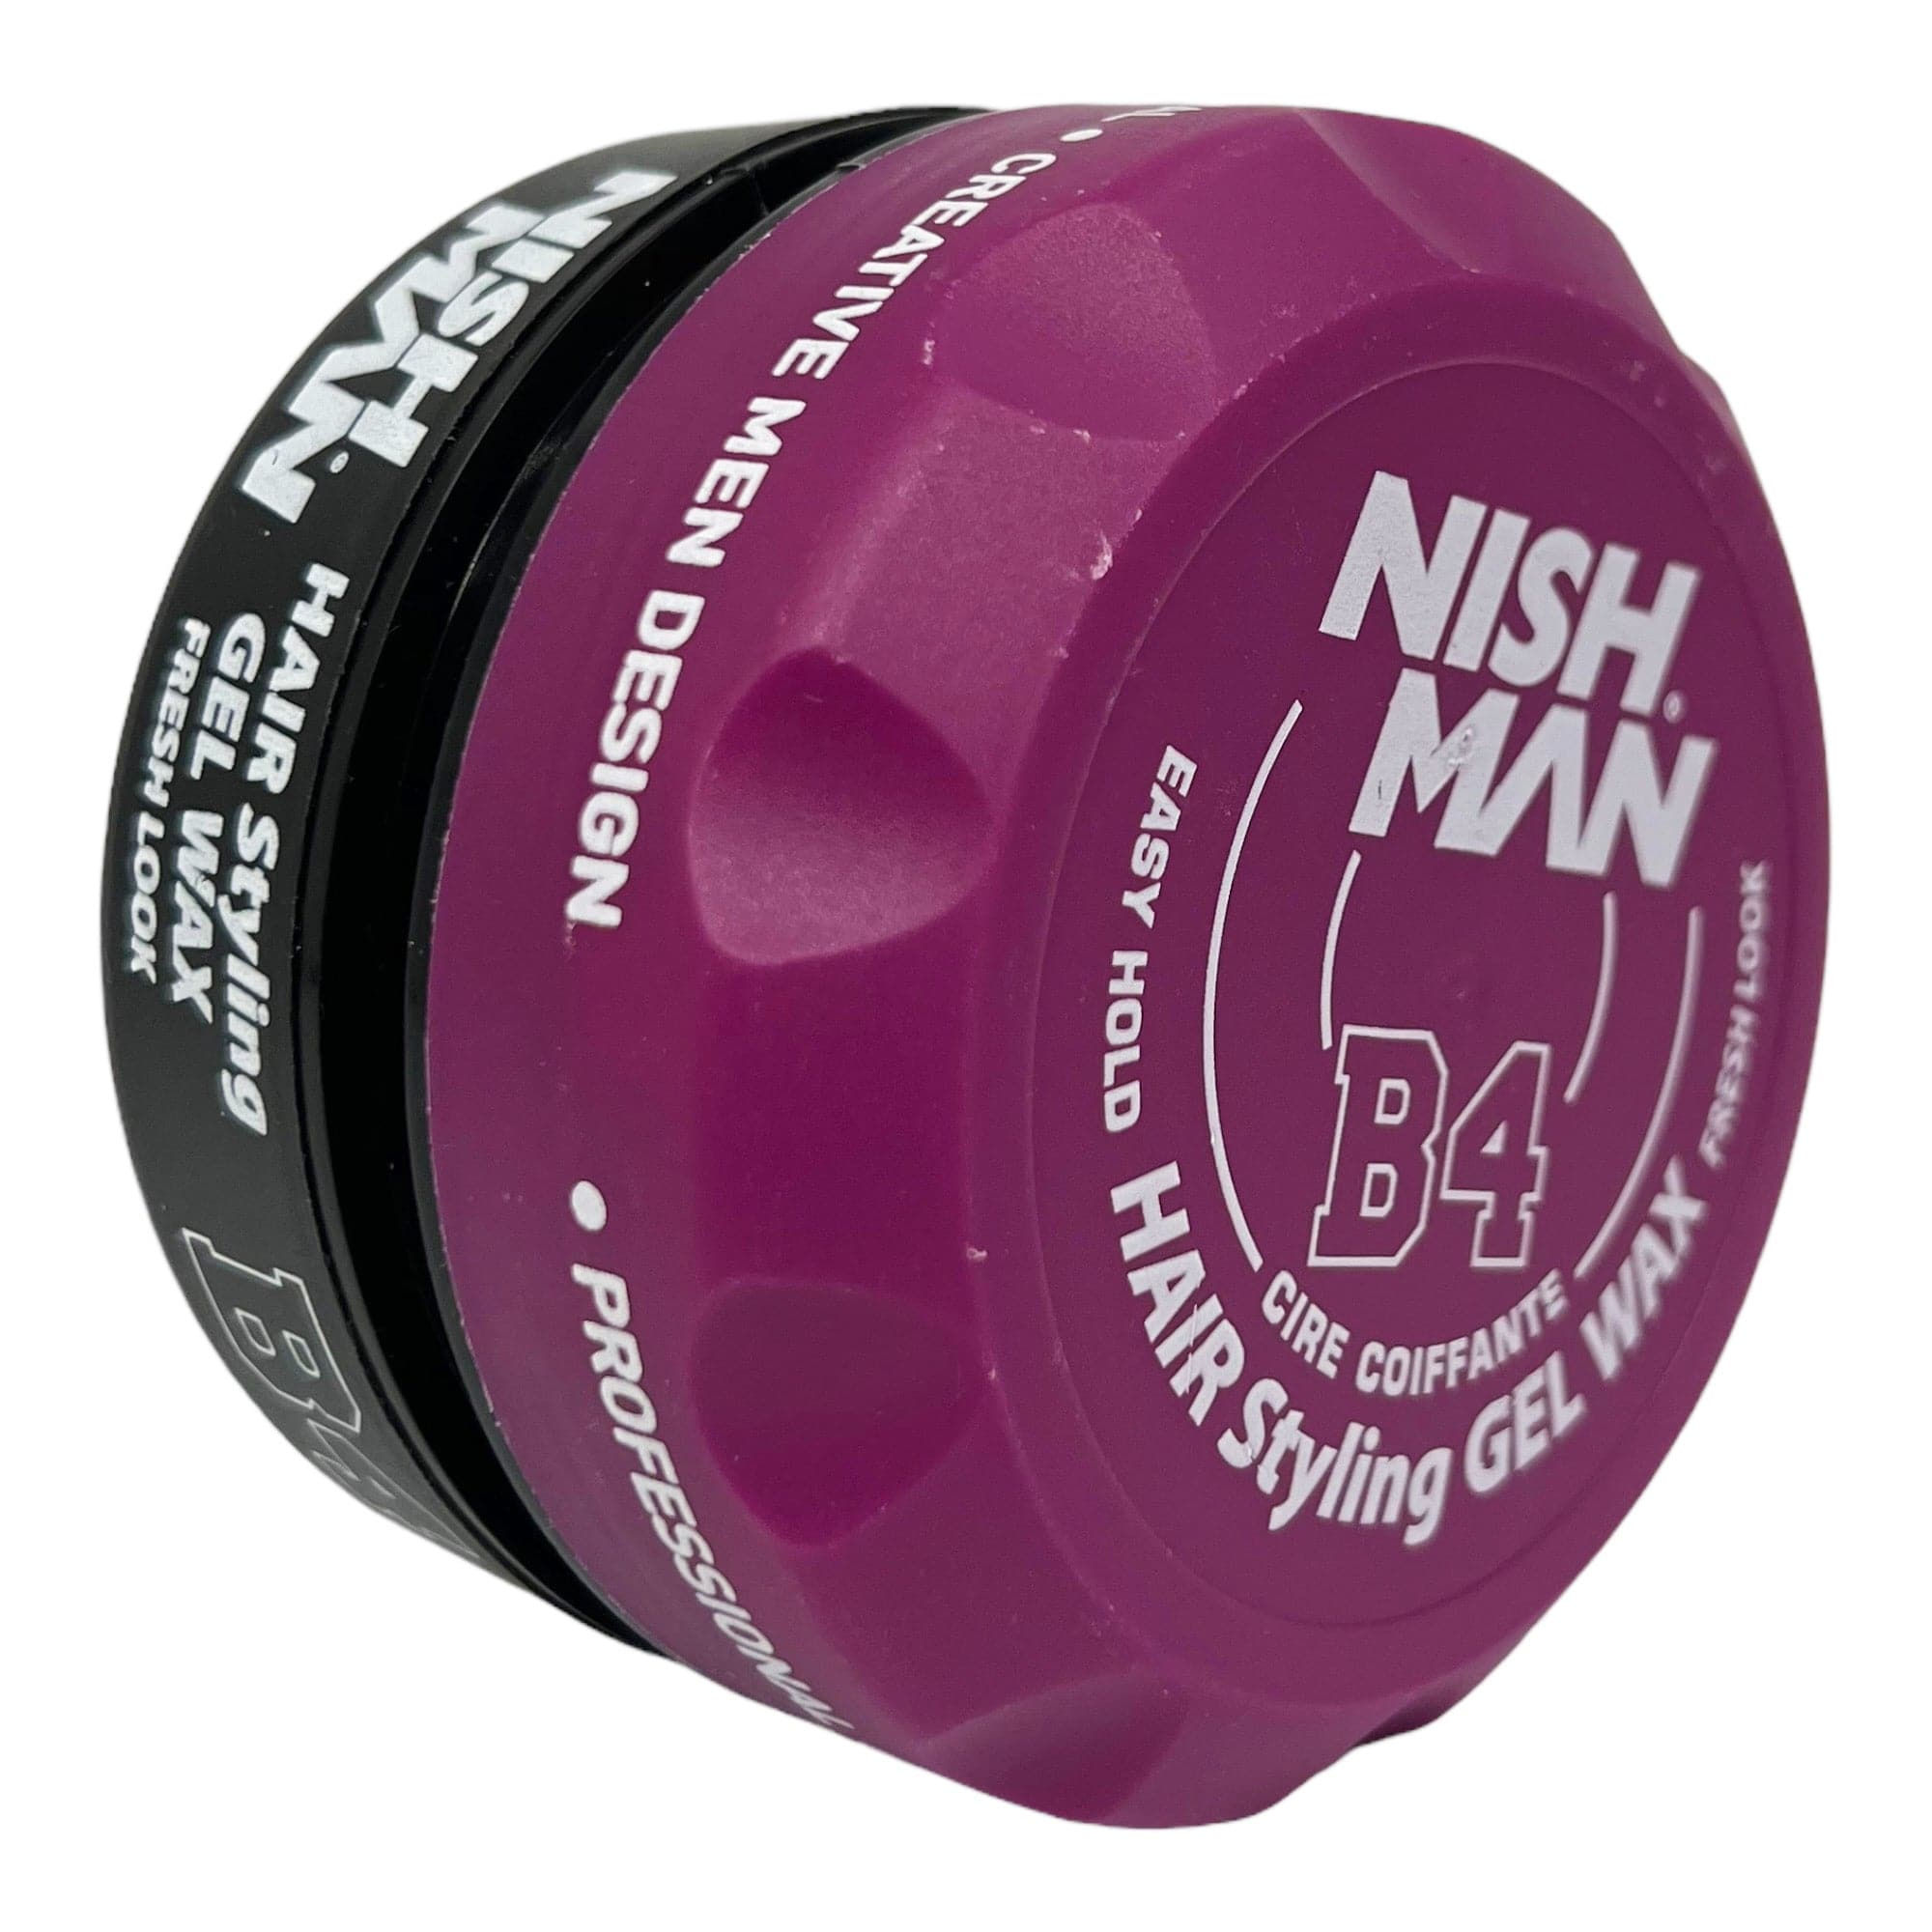 Nishman - Hair Styling Gel Wax B4 Fresh Look 150ml